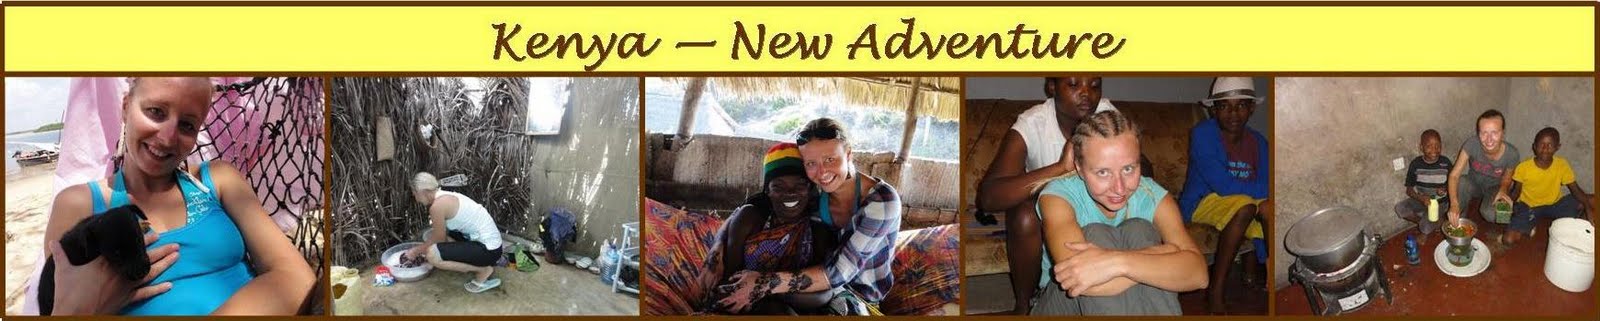 Kenya - New Adventure